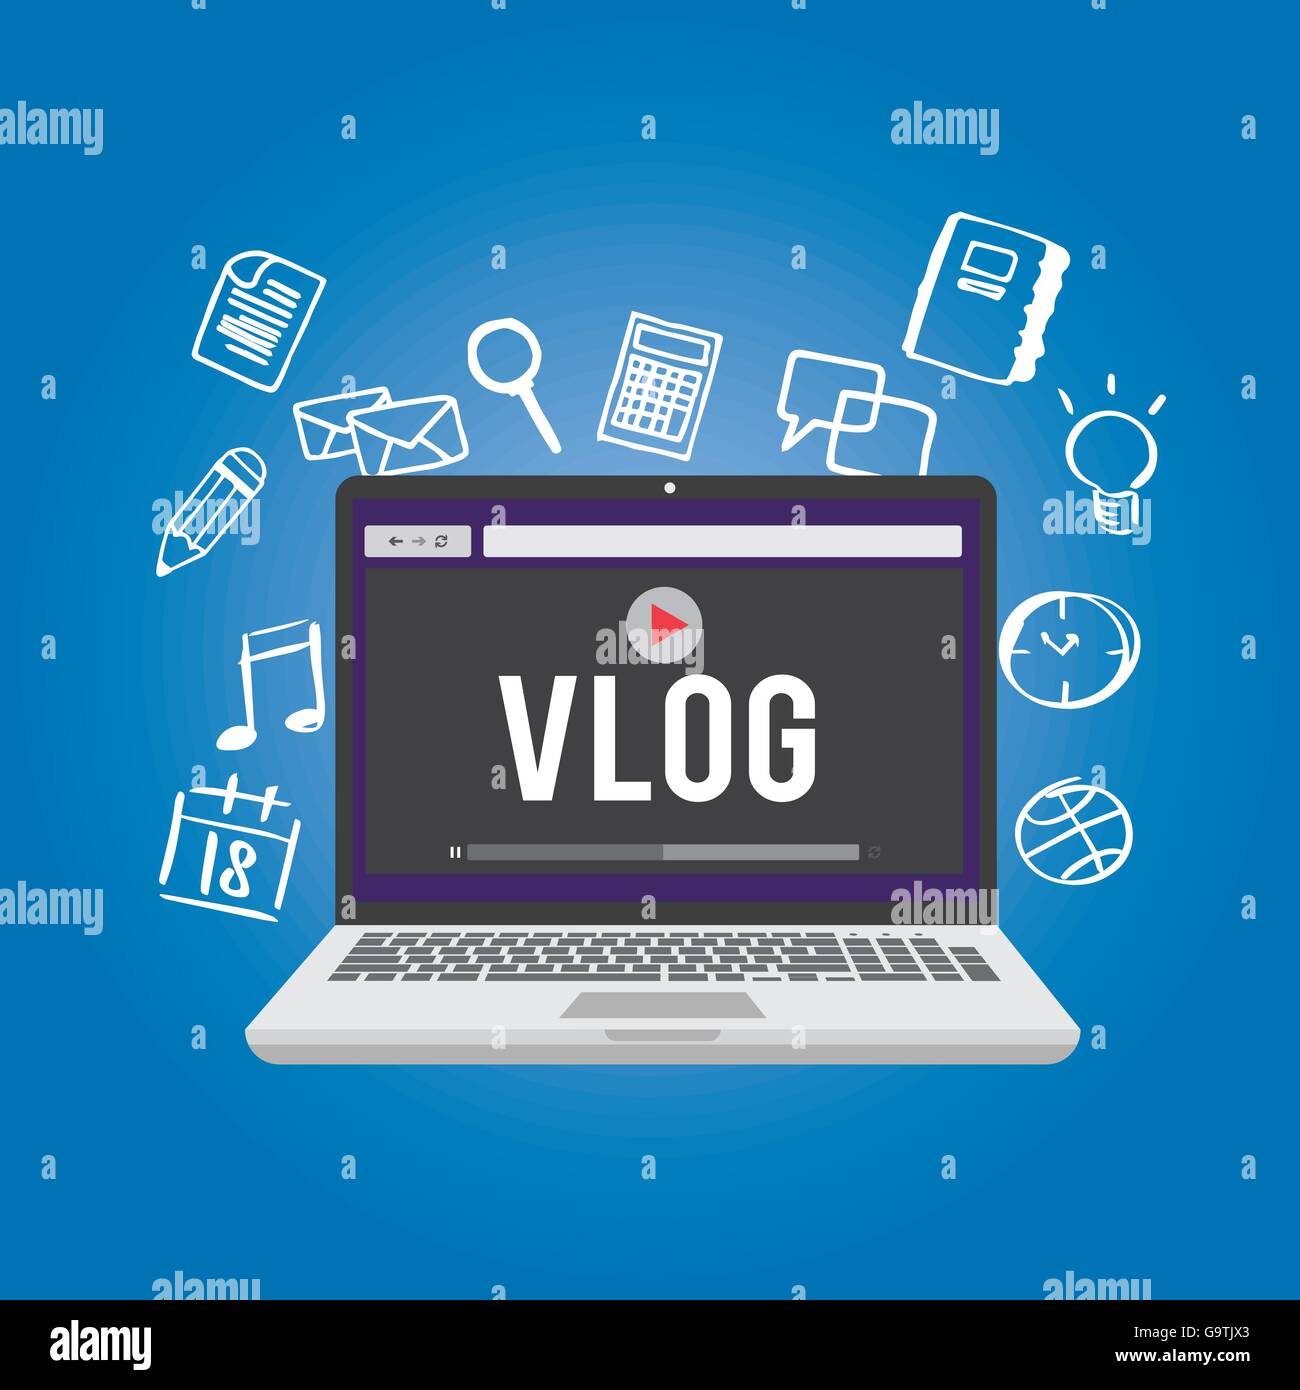 vlog video blogging vector illustration concept design Stock Vector